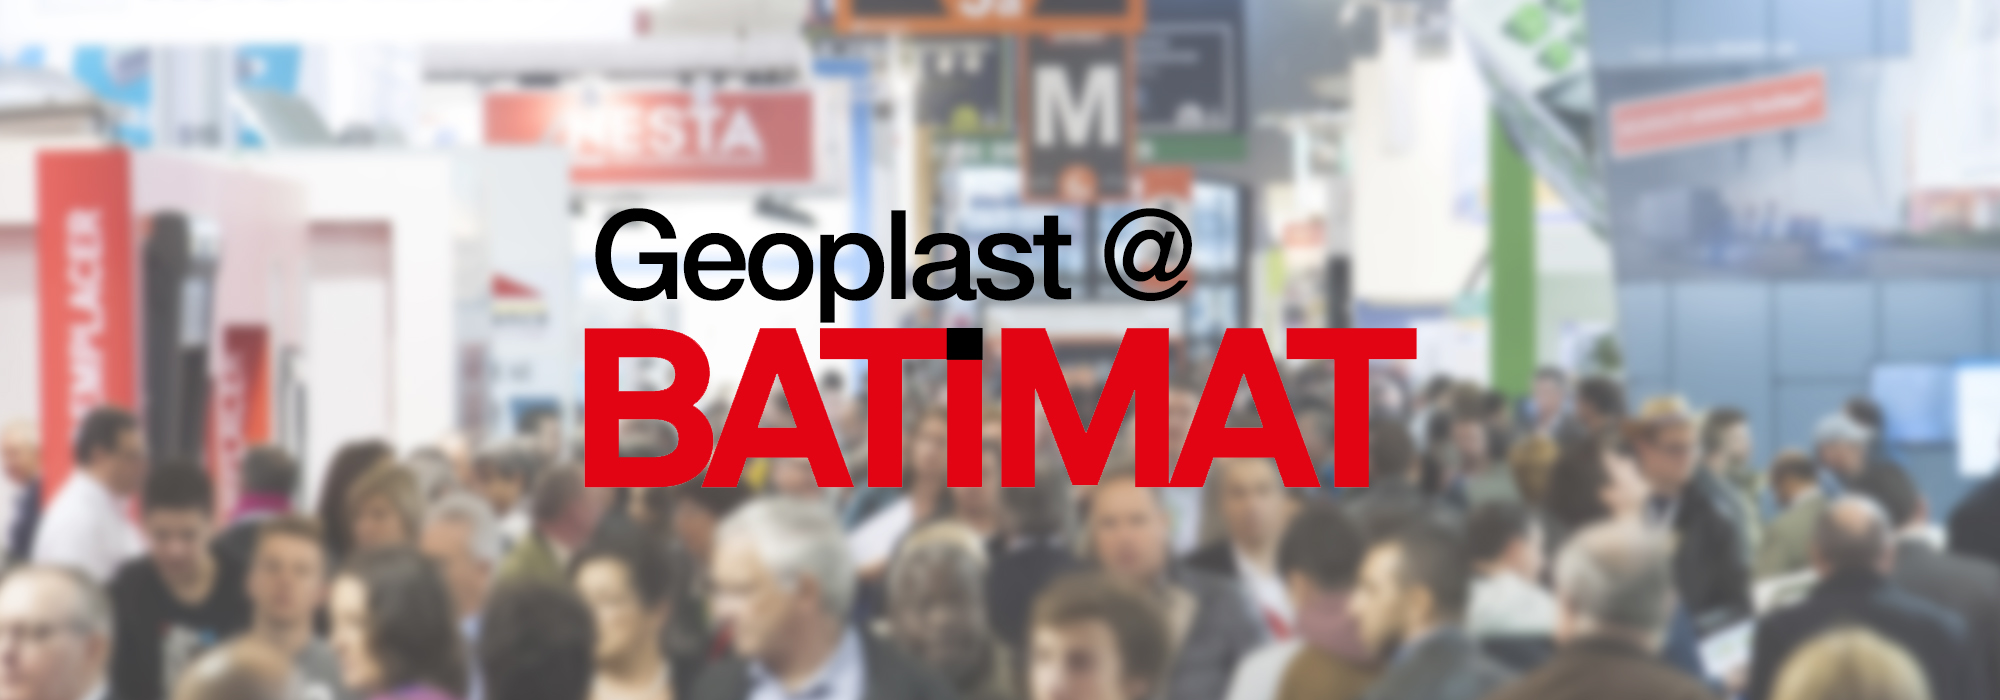 Geoplast Batimat 2019